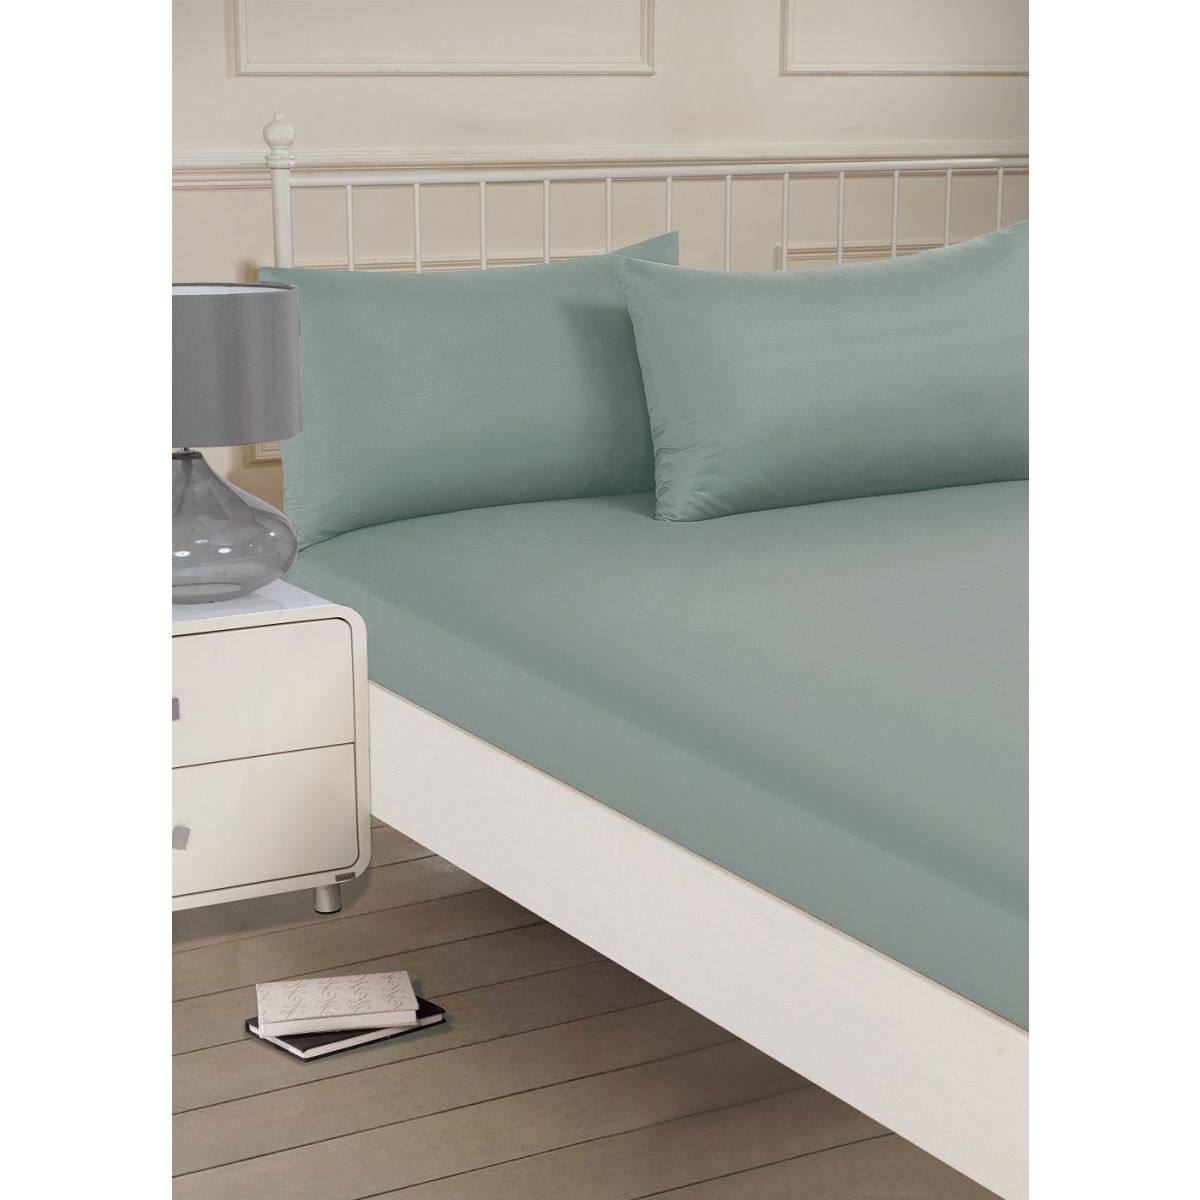 Brentfords Plain Dye Bed Fitted Sheet Soft Microfibre - Duck Egg - Single Size